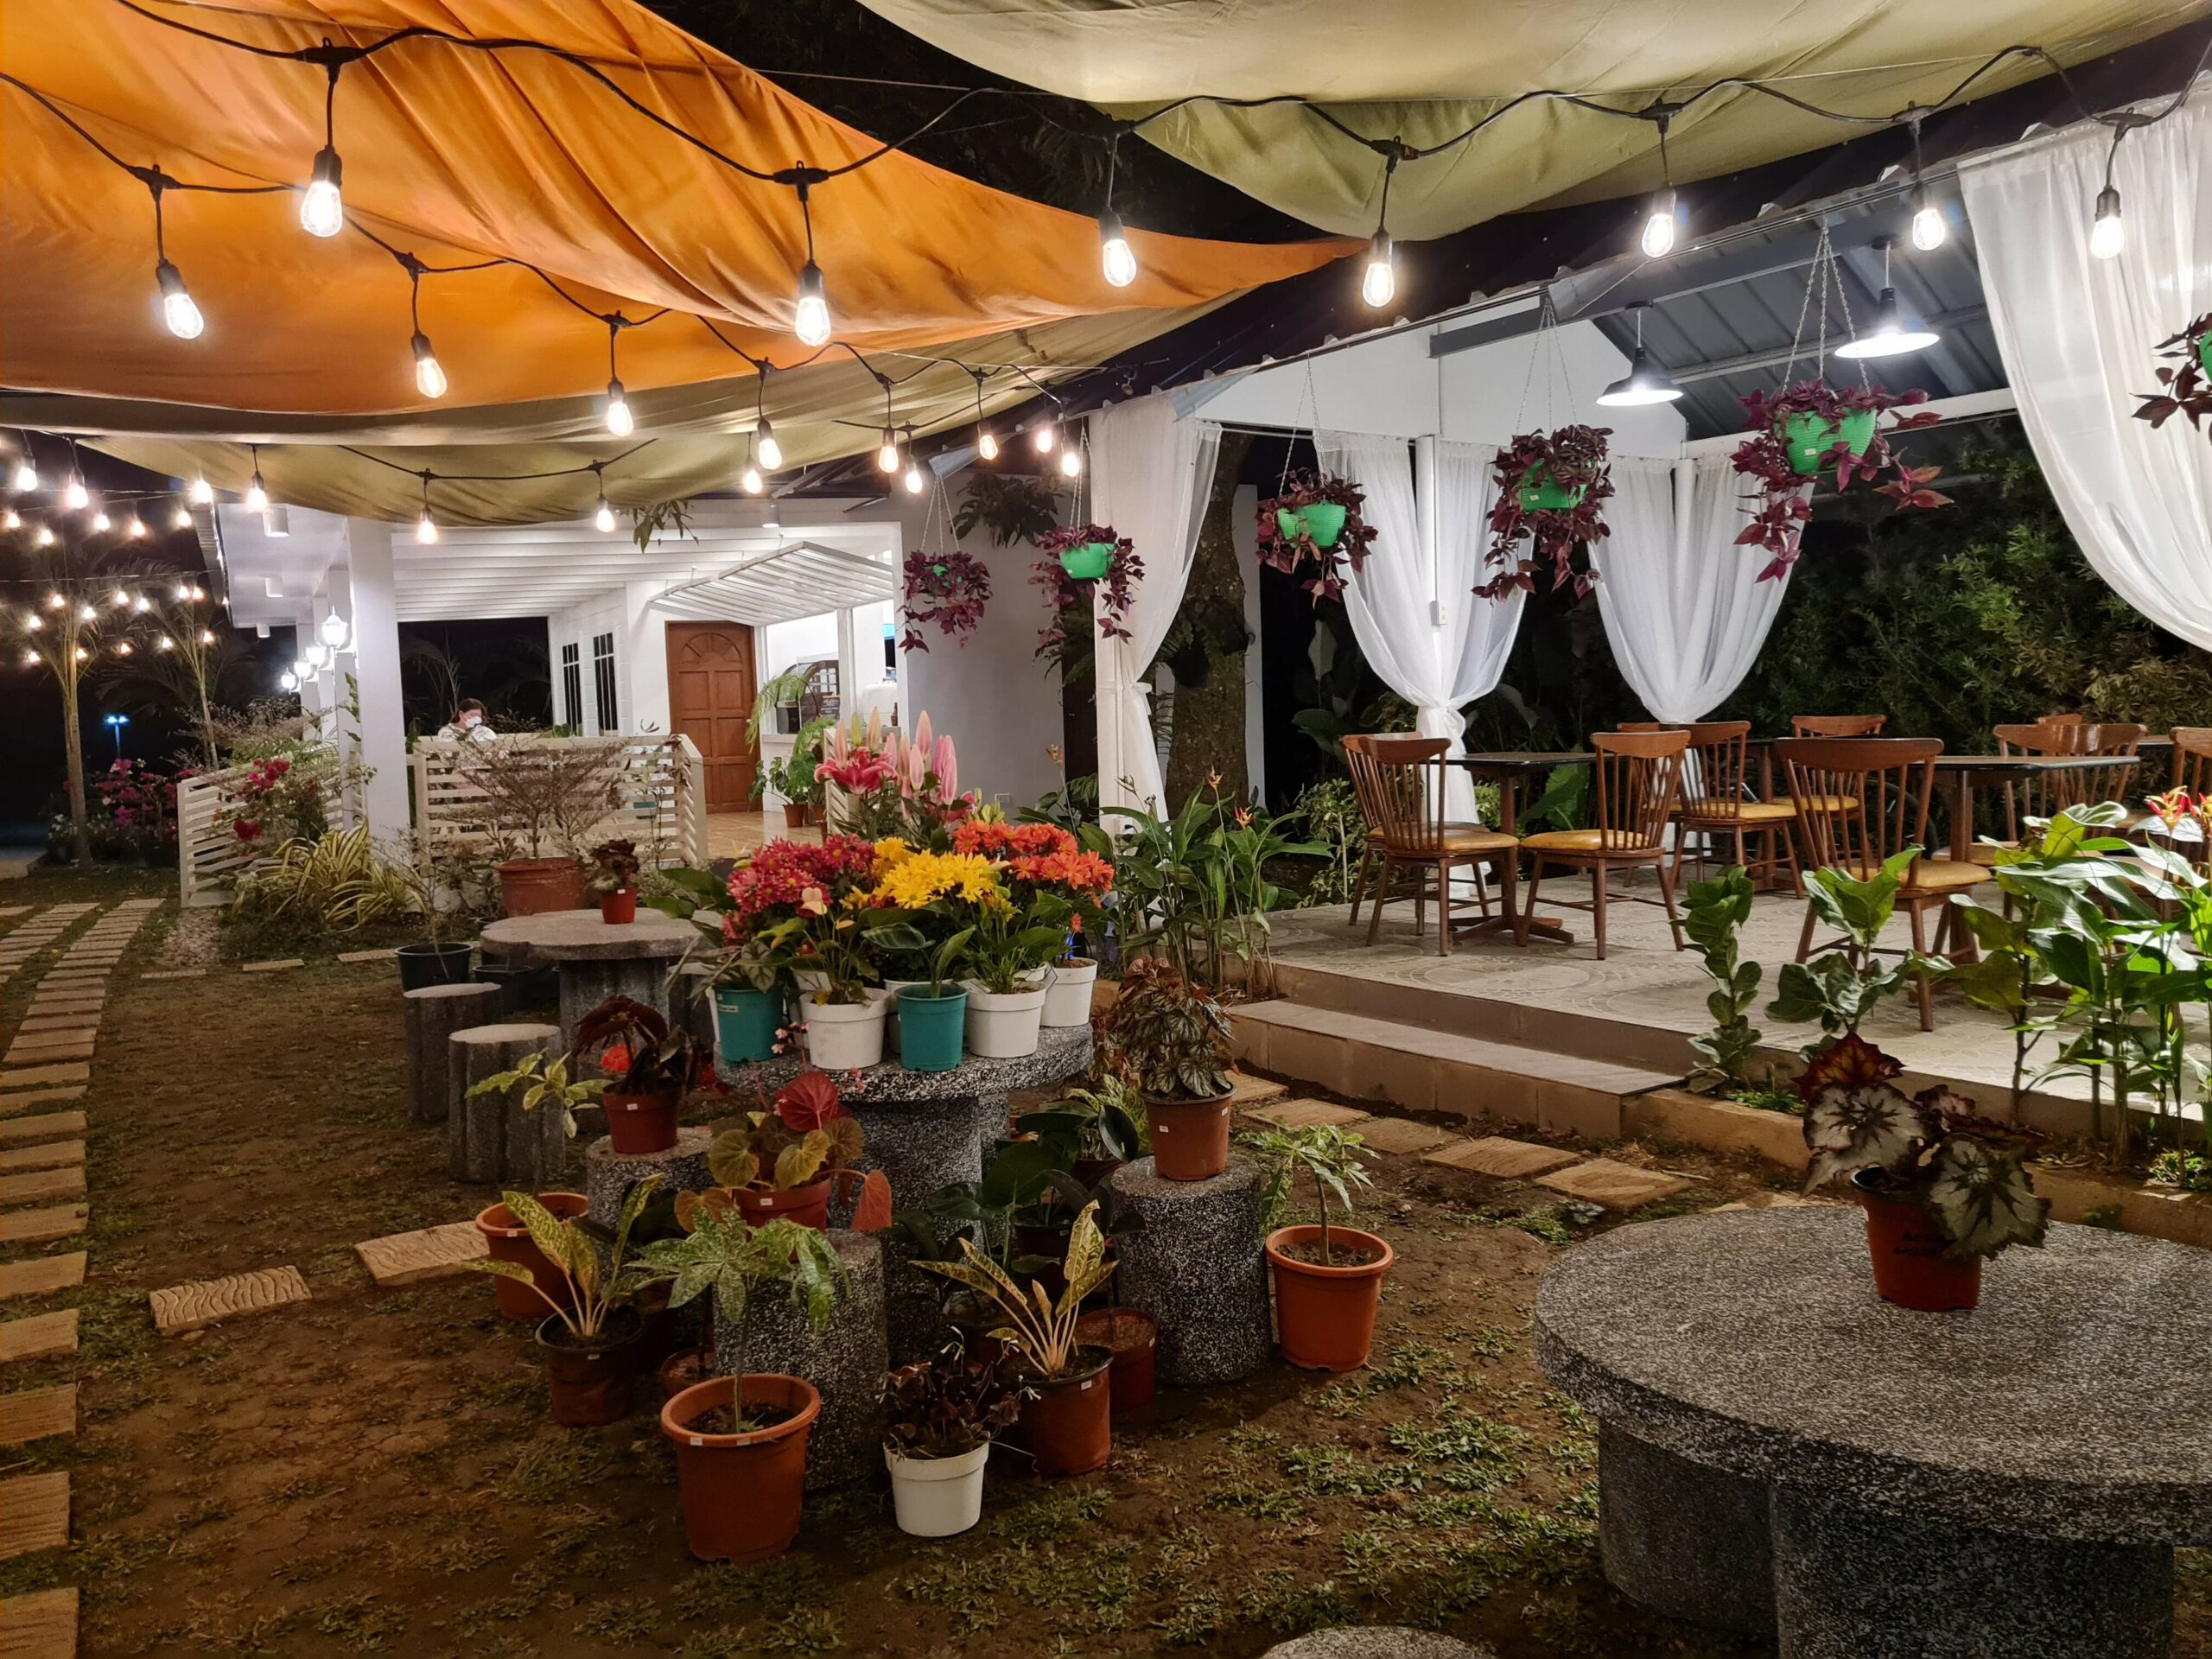 Hidden Charm Cafe in Silang, Cavite - garden-like setup